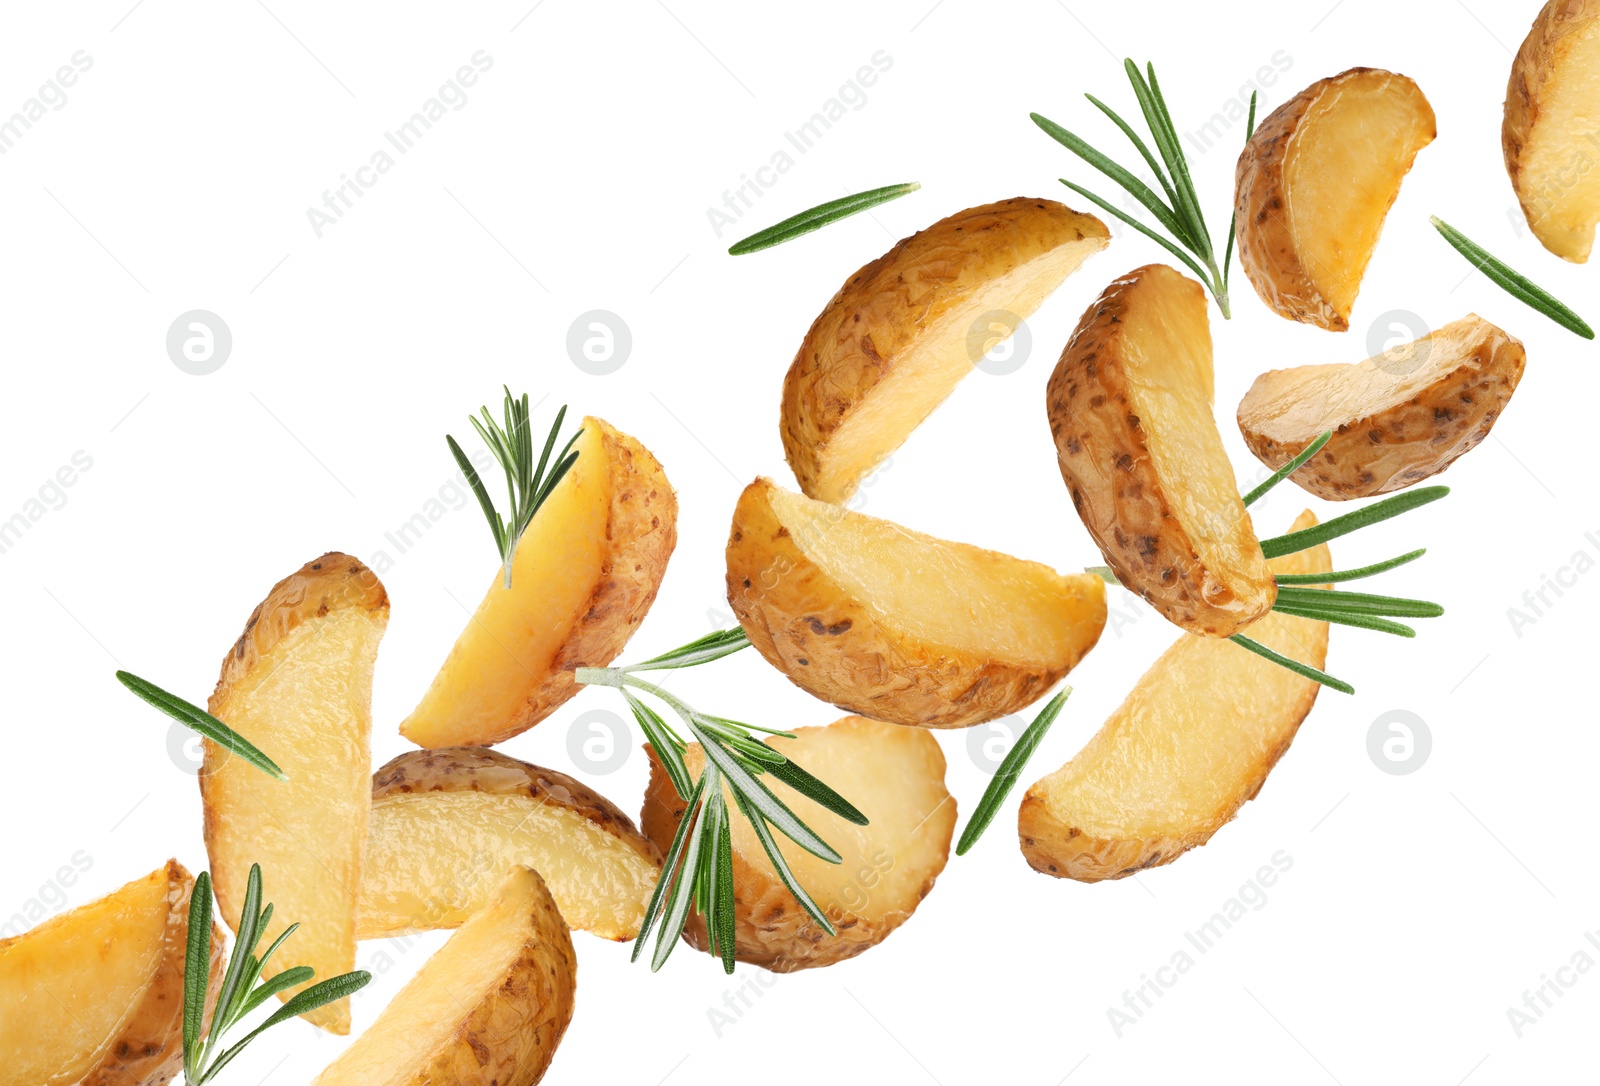 Image of Tasty baked potatoes and rosemary falling on white background